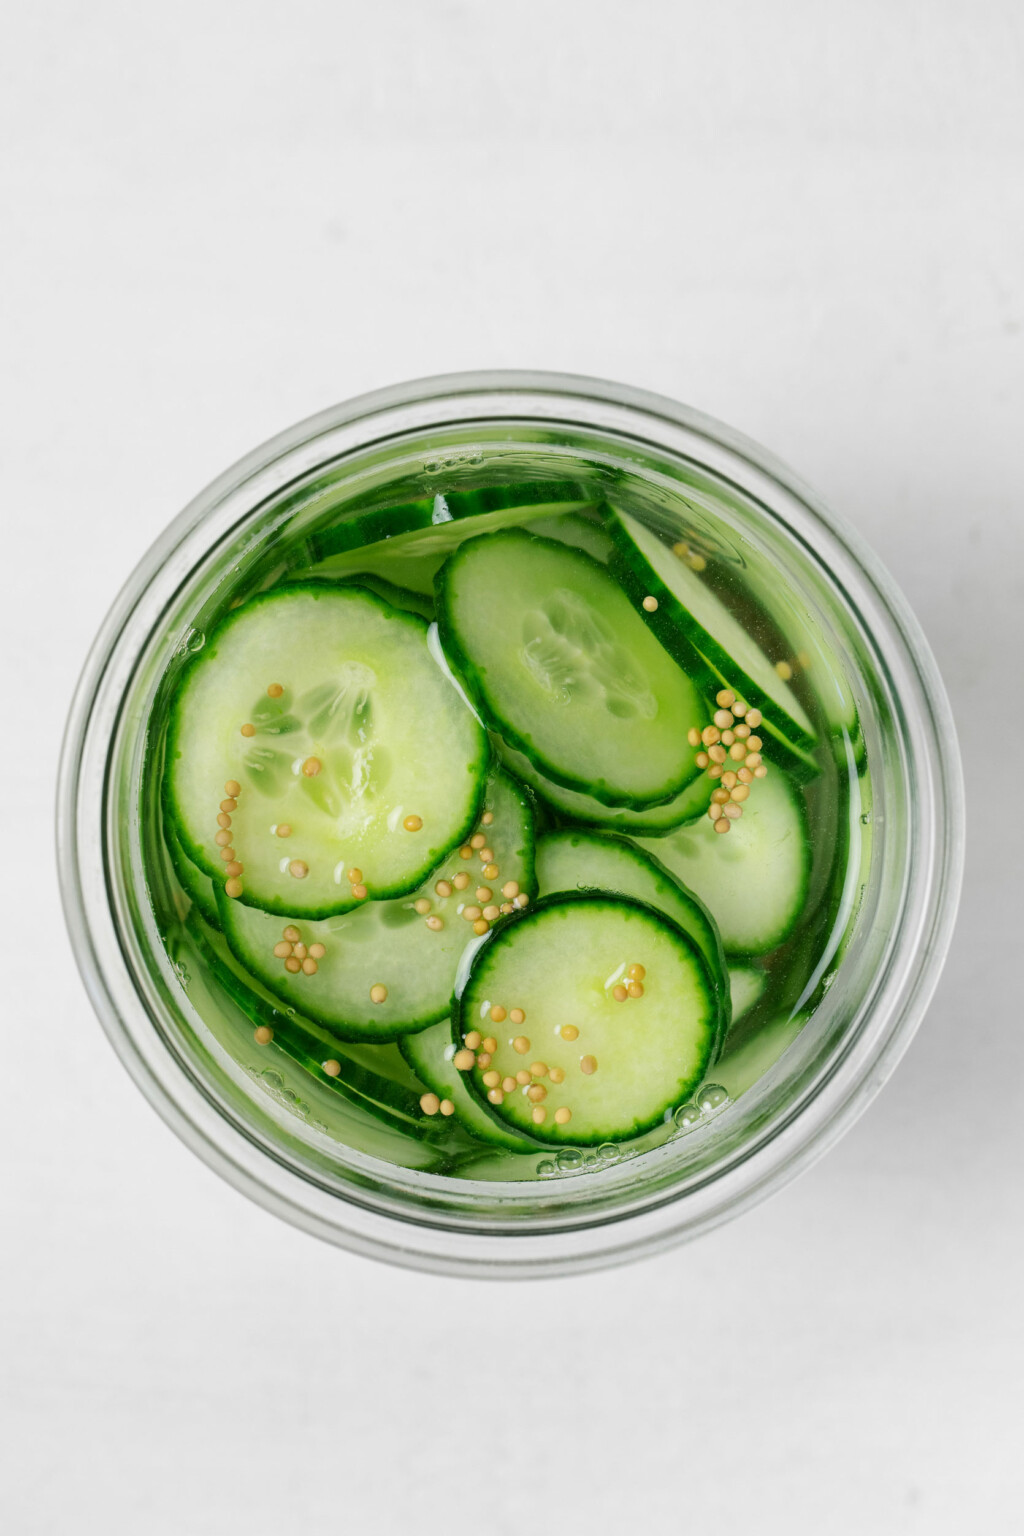 https://www.thefullhelping.com/wp-content/uploads/2023/06/pickled-cucumber-slices-2-1024x1536.jpg